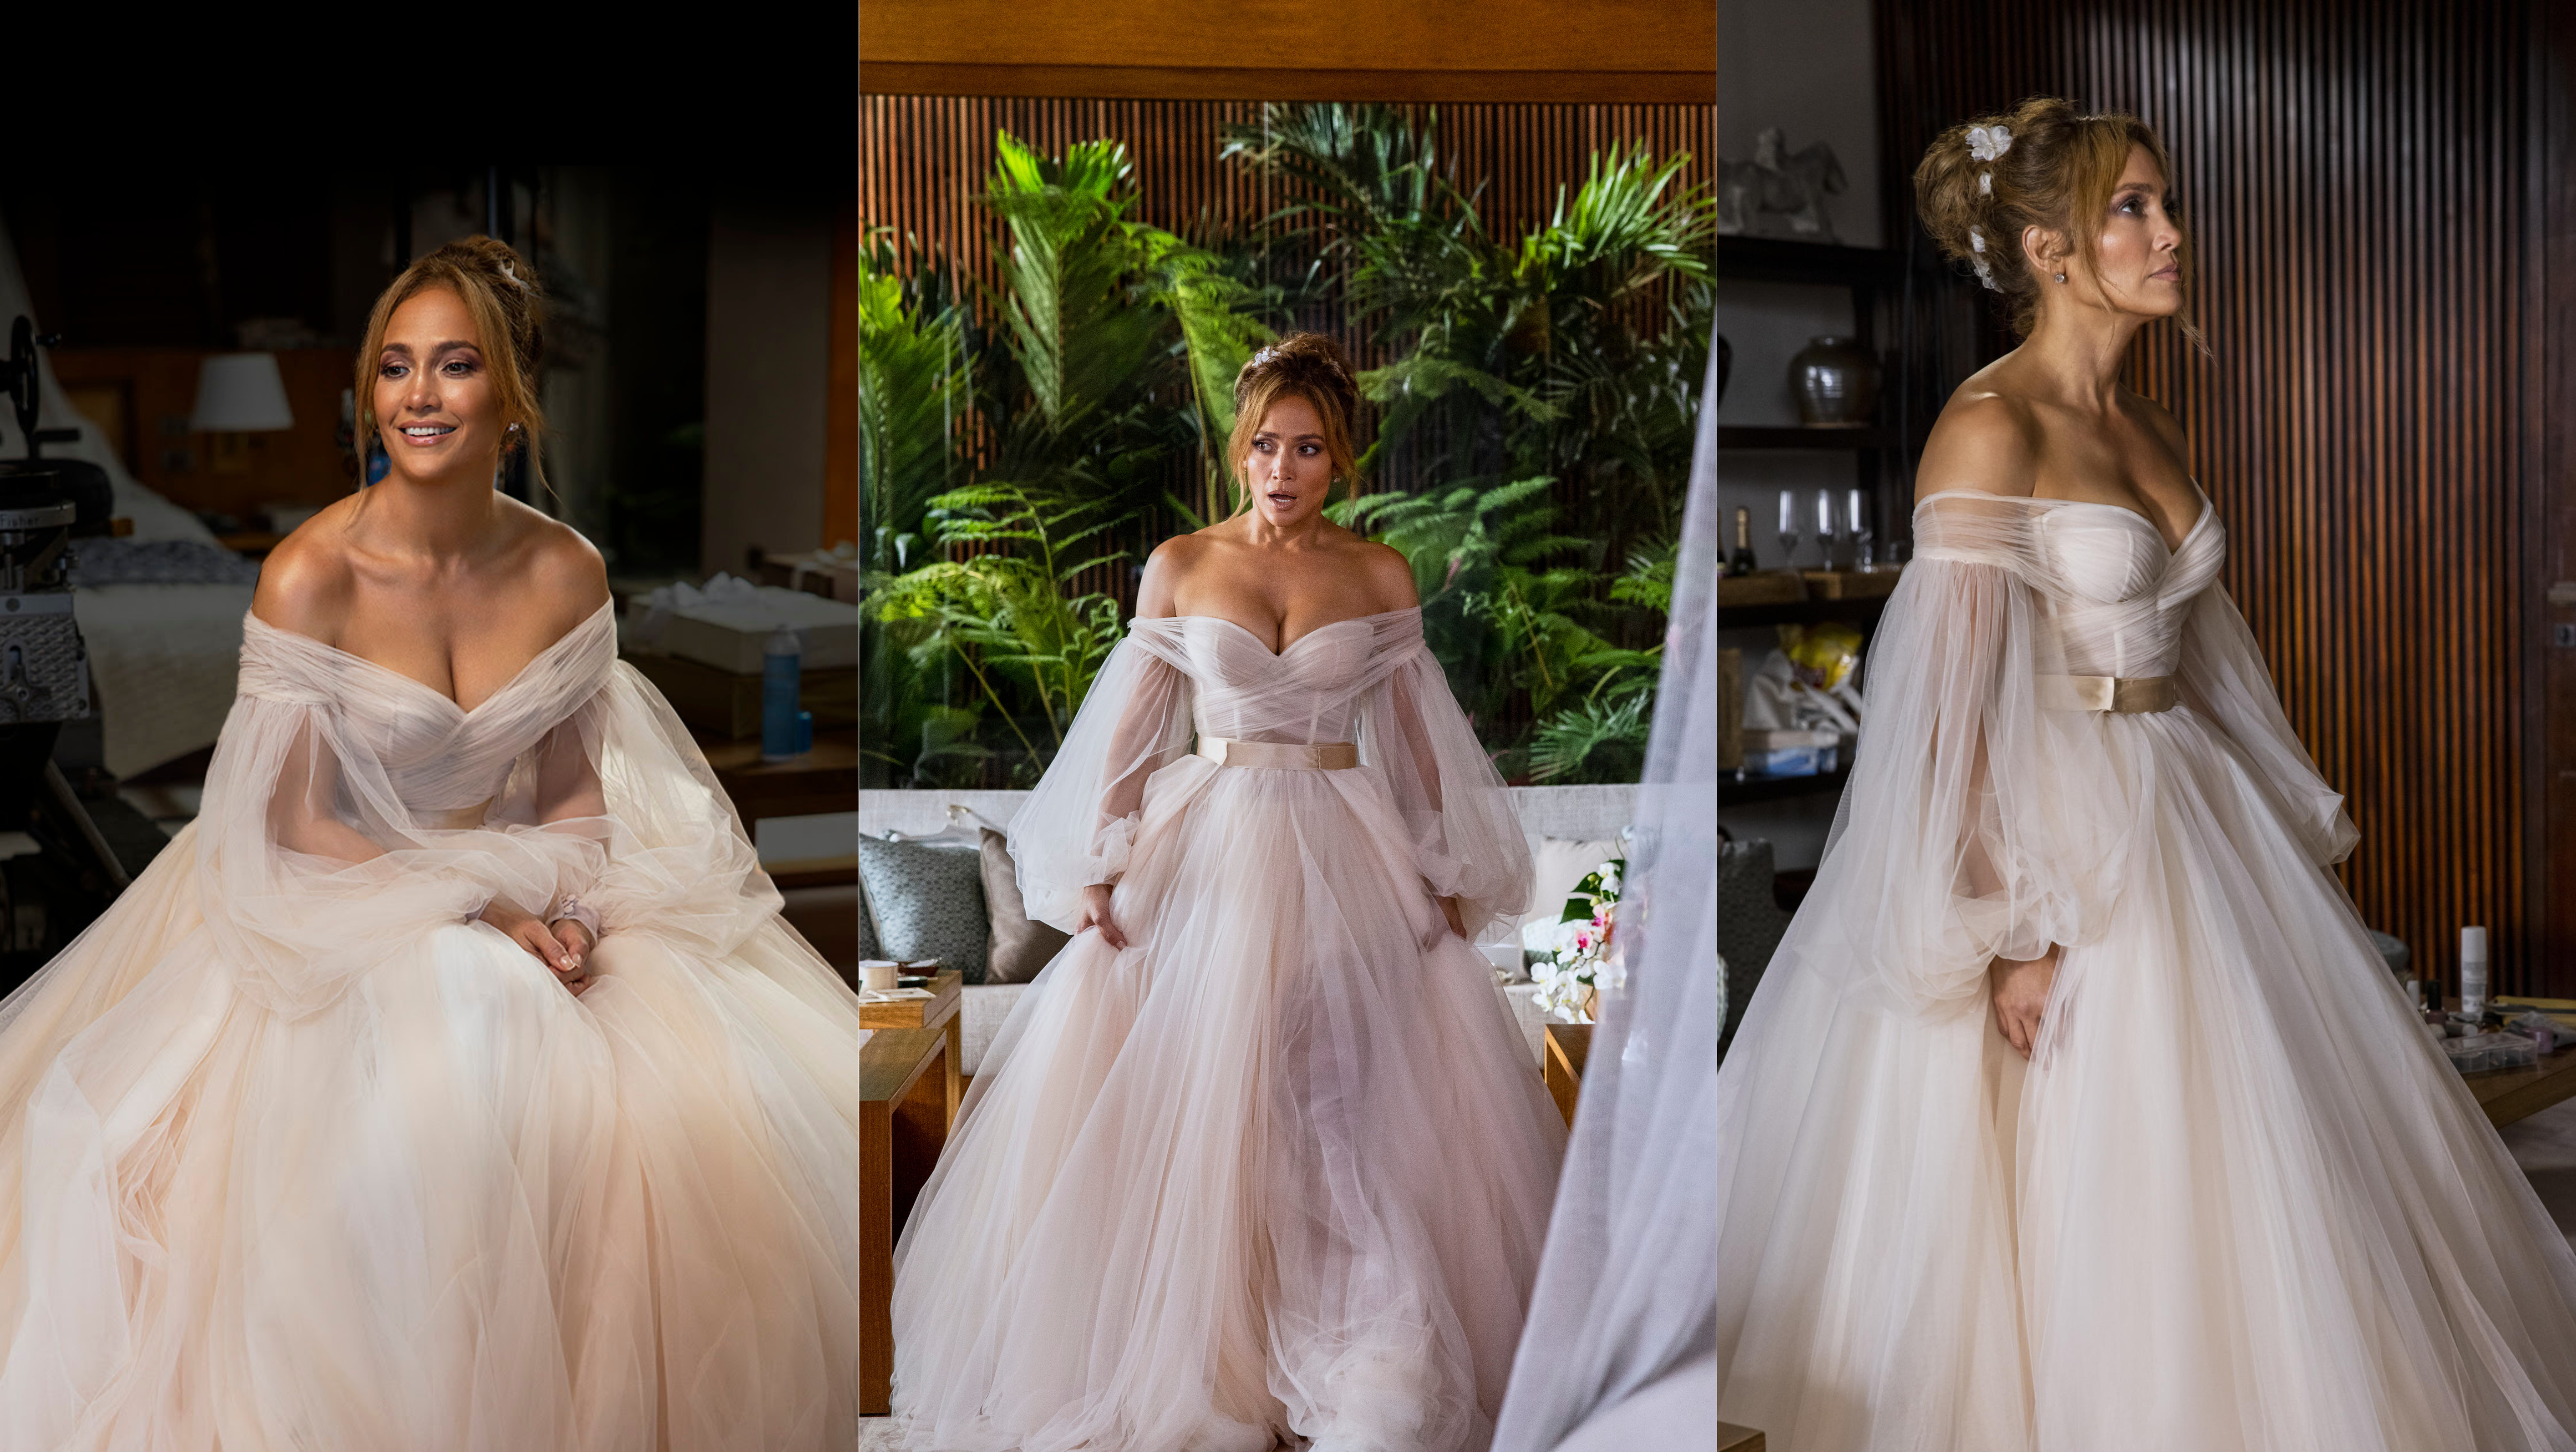 J.Lo in Bellina-inspired wedding dress by Galia Lahav